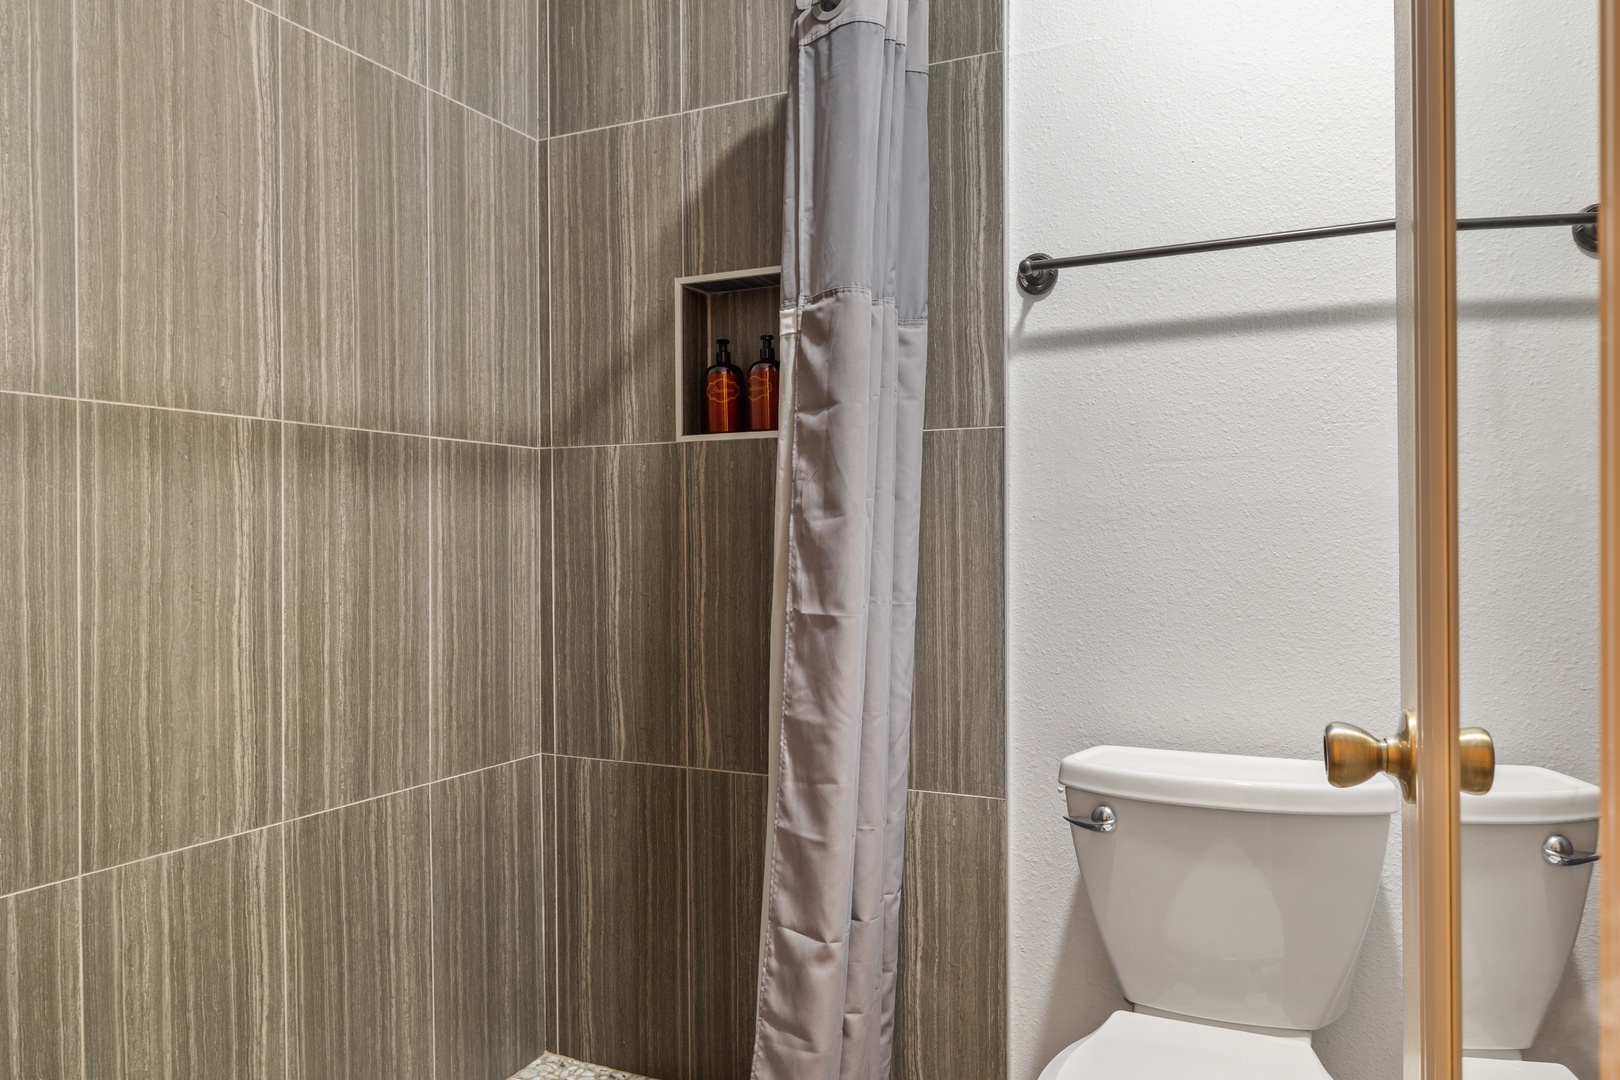 The queen en suite bathroom offers a large single vanity & walk-in shower